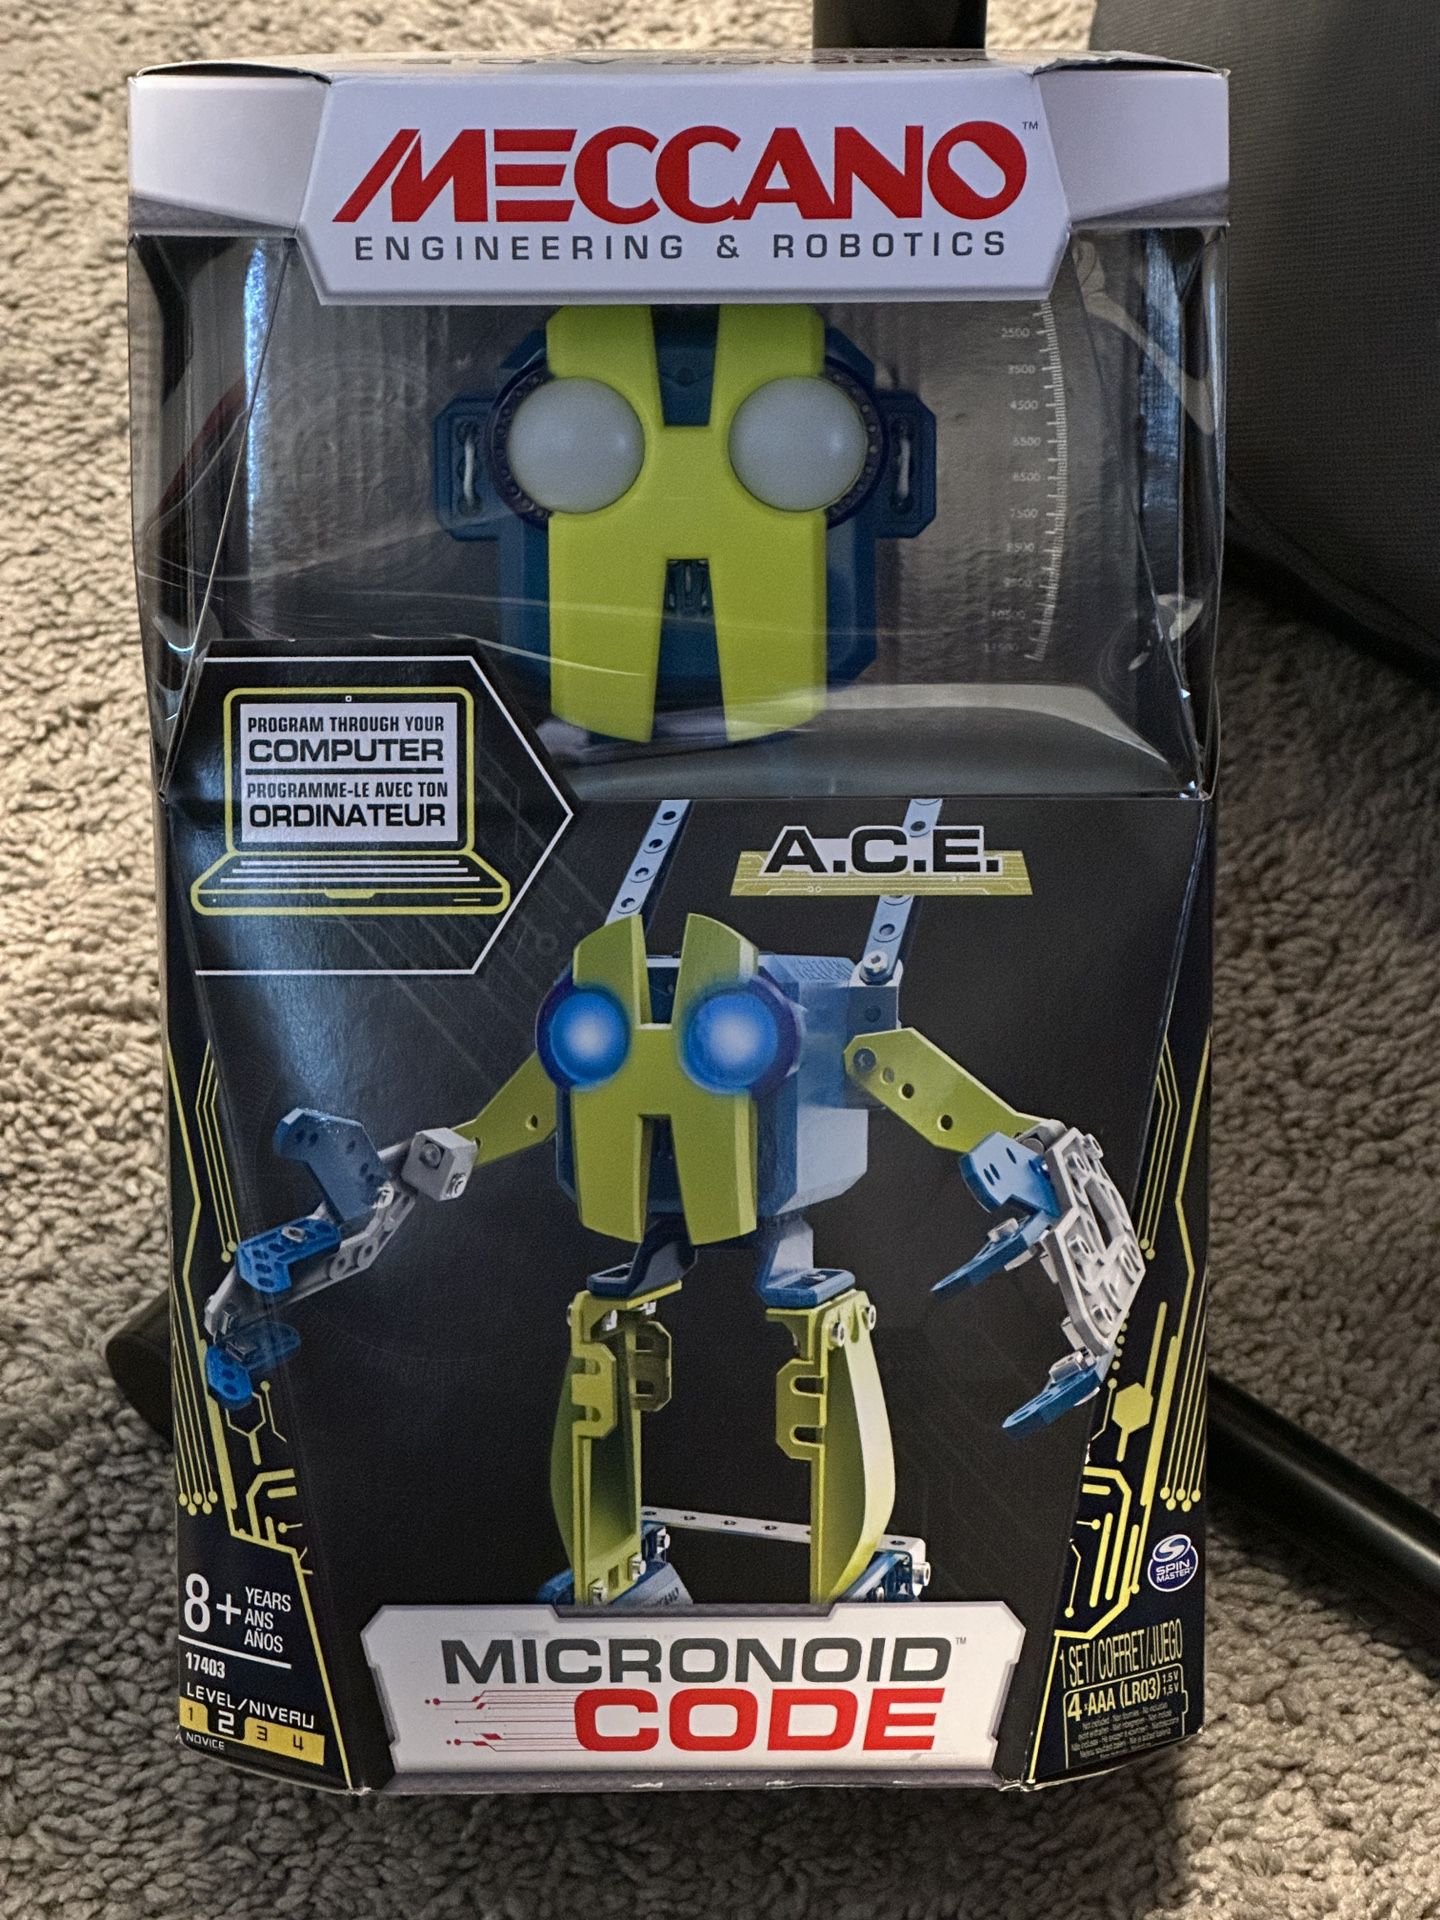 (New In Box) Meccano-Erector - Micronoid Code A.C.E. Programmable Robot Building Kit